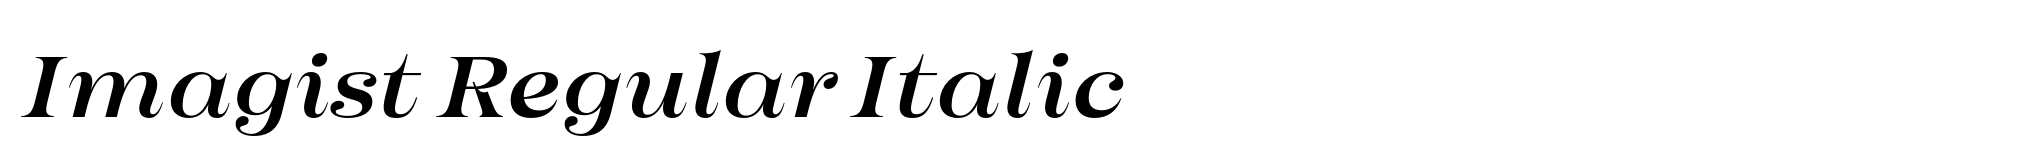 Imagist Regular Italic image